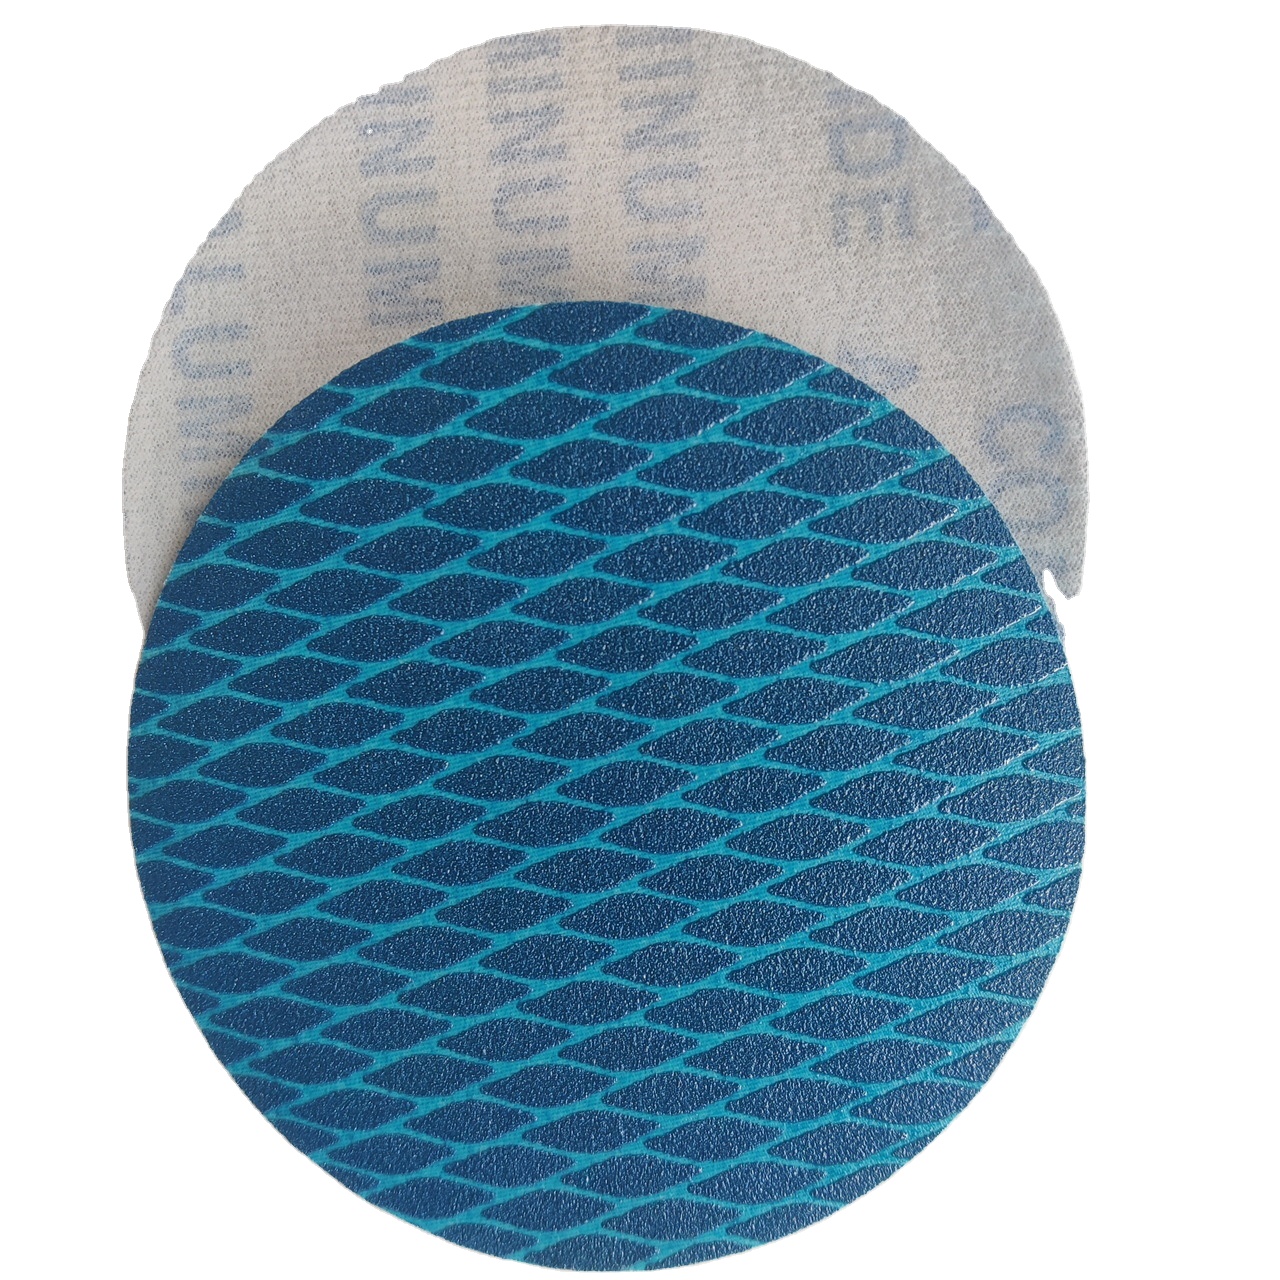 Aluminum Oxide Sanding Disc